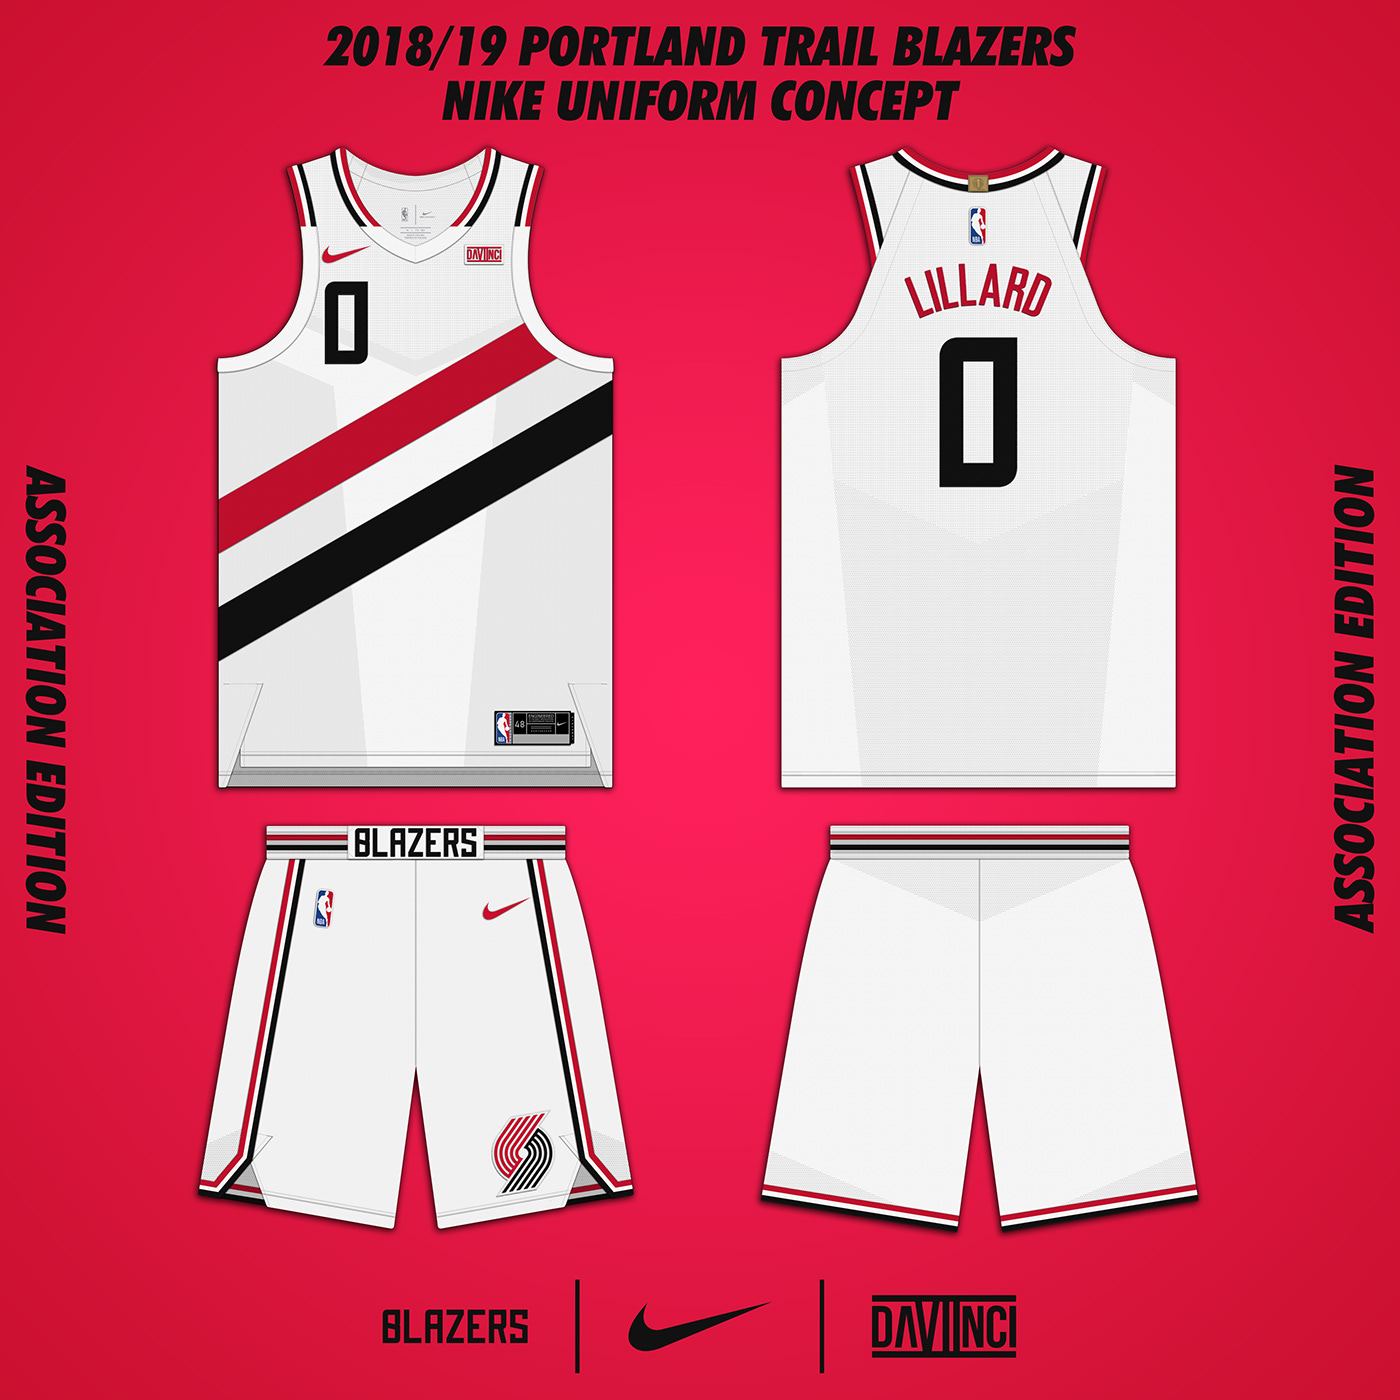 Portland trail blazers blazers Nike uniform jersey concept NBA basketball